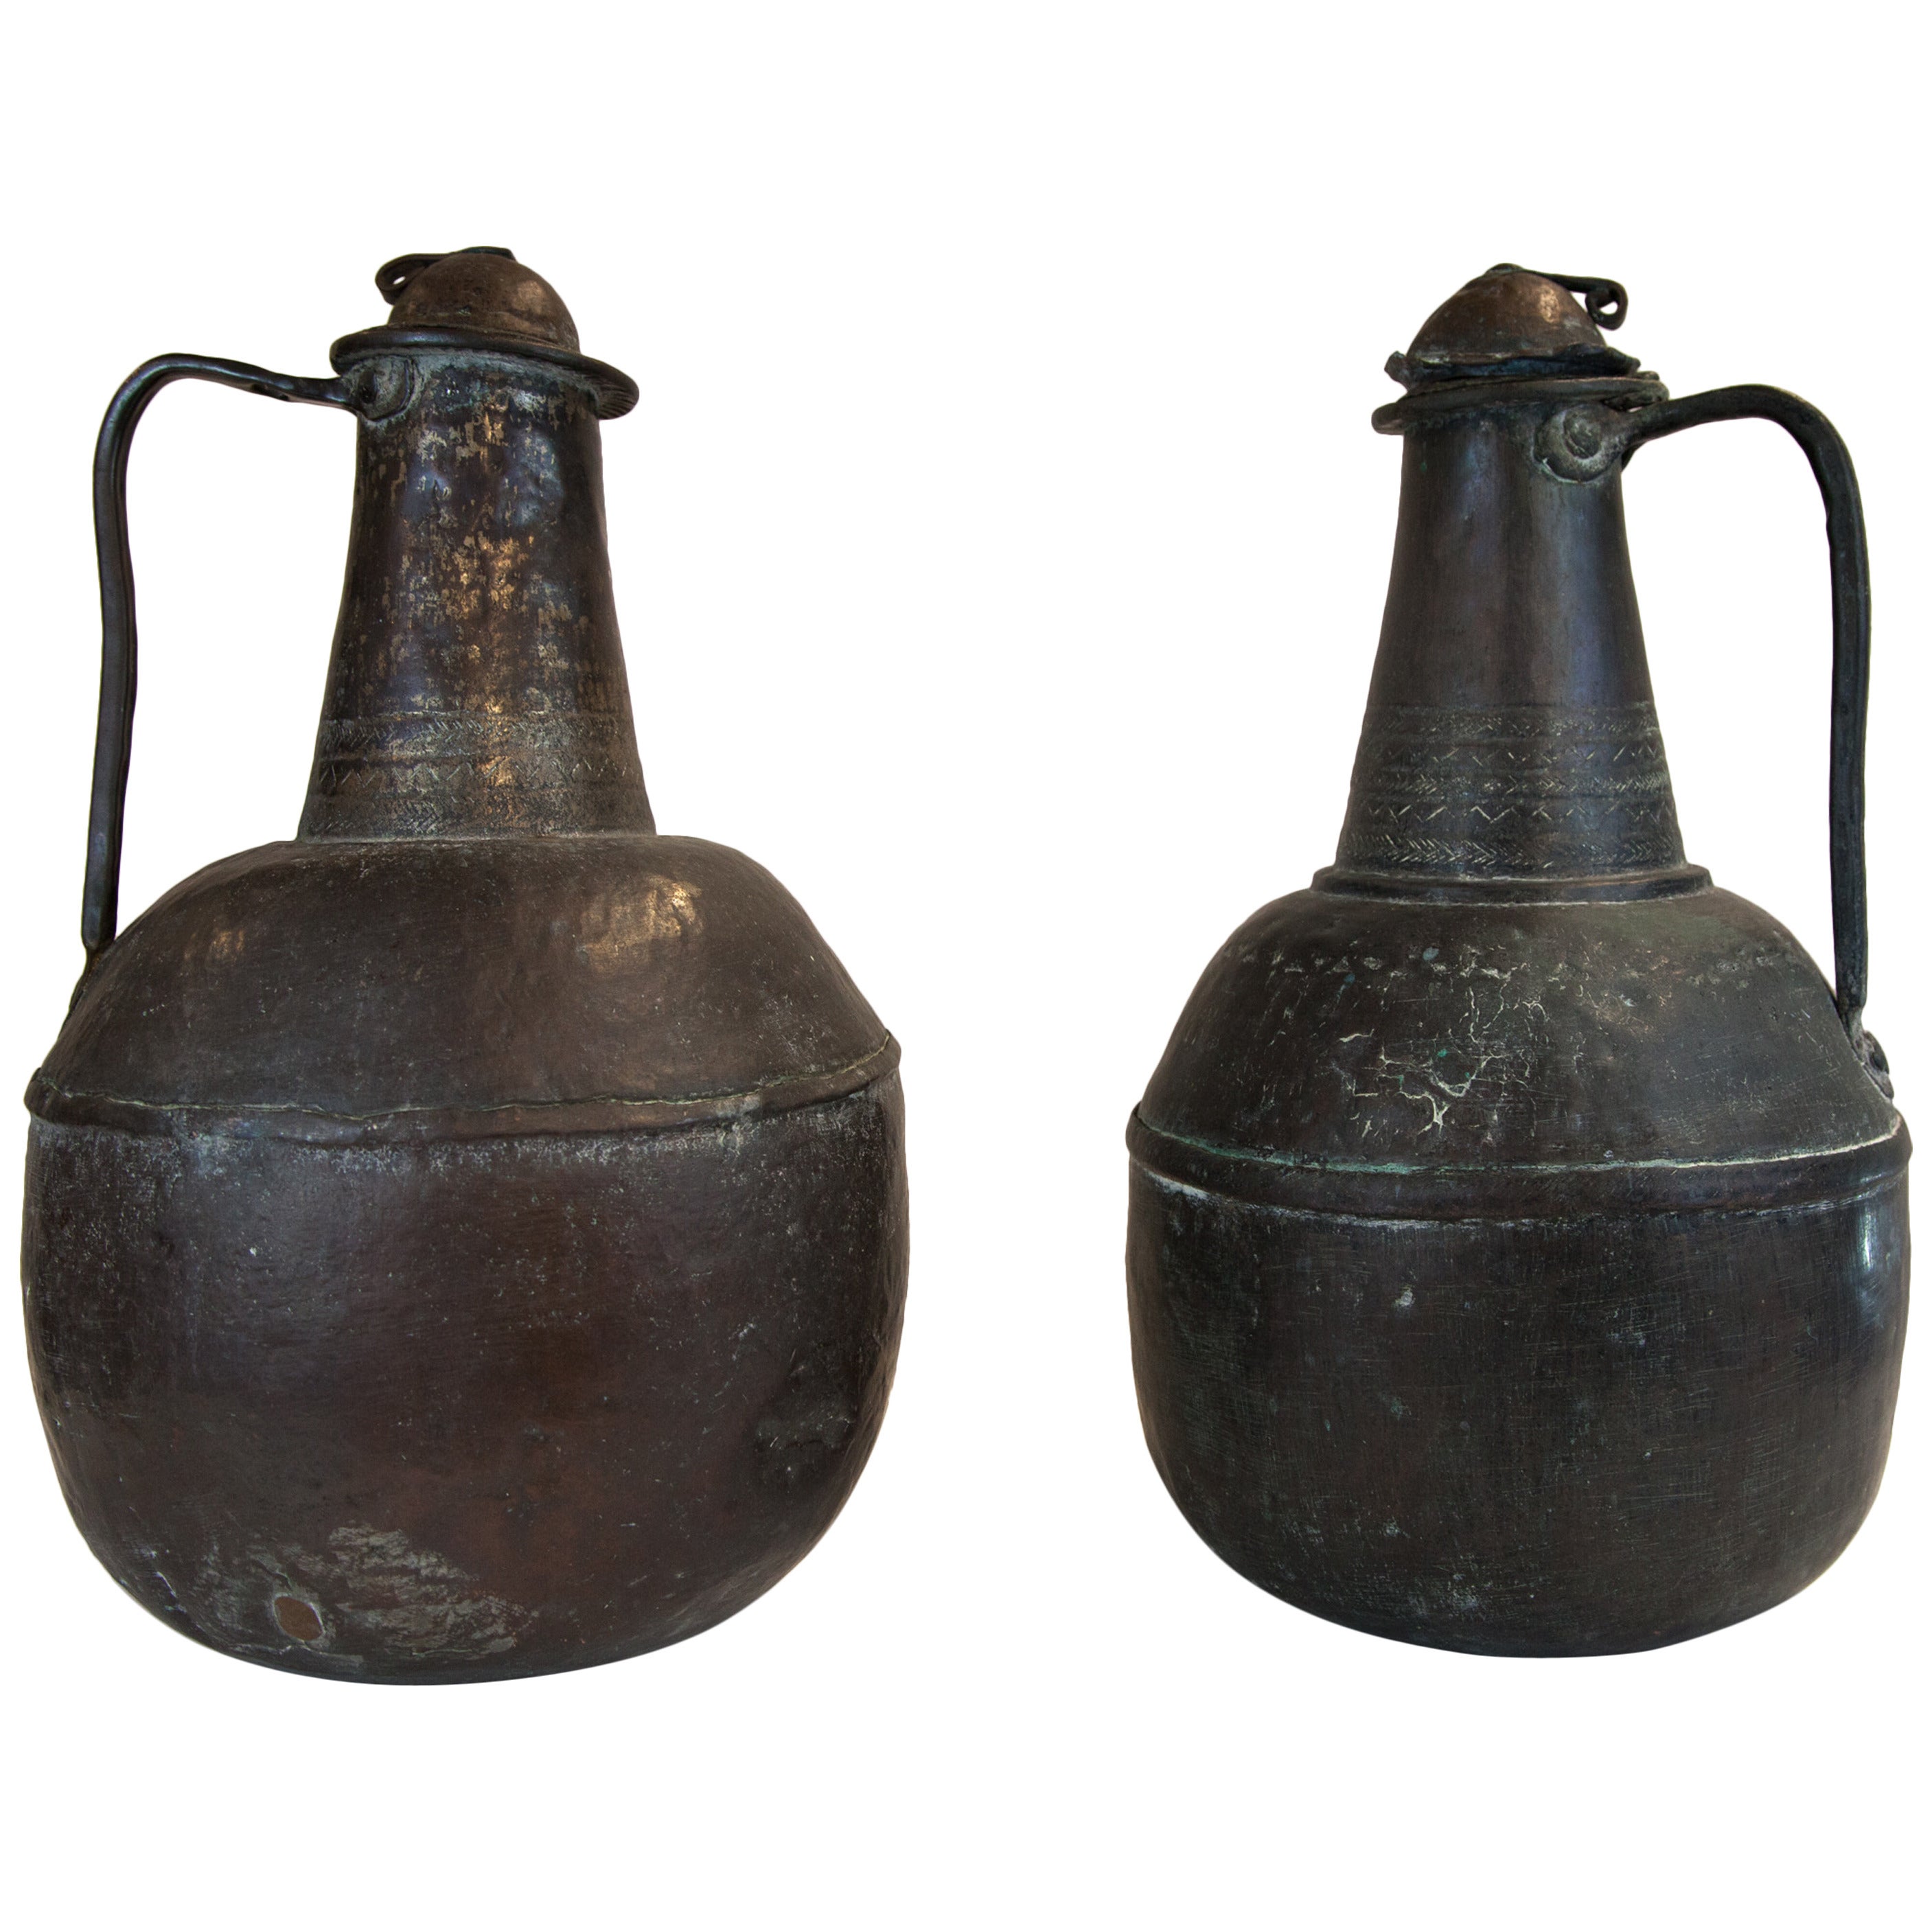 Late 19th century Moroccan Copper Water Jugs